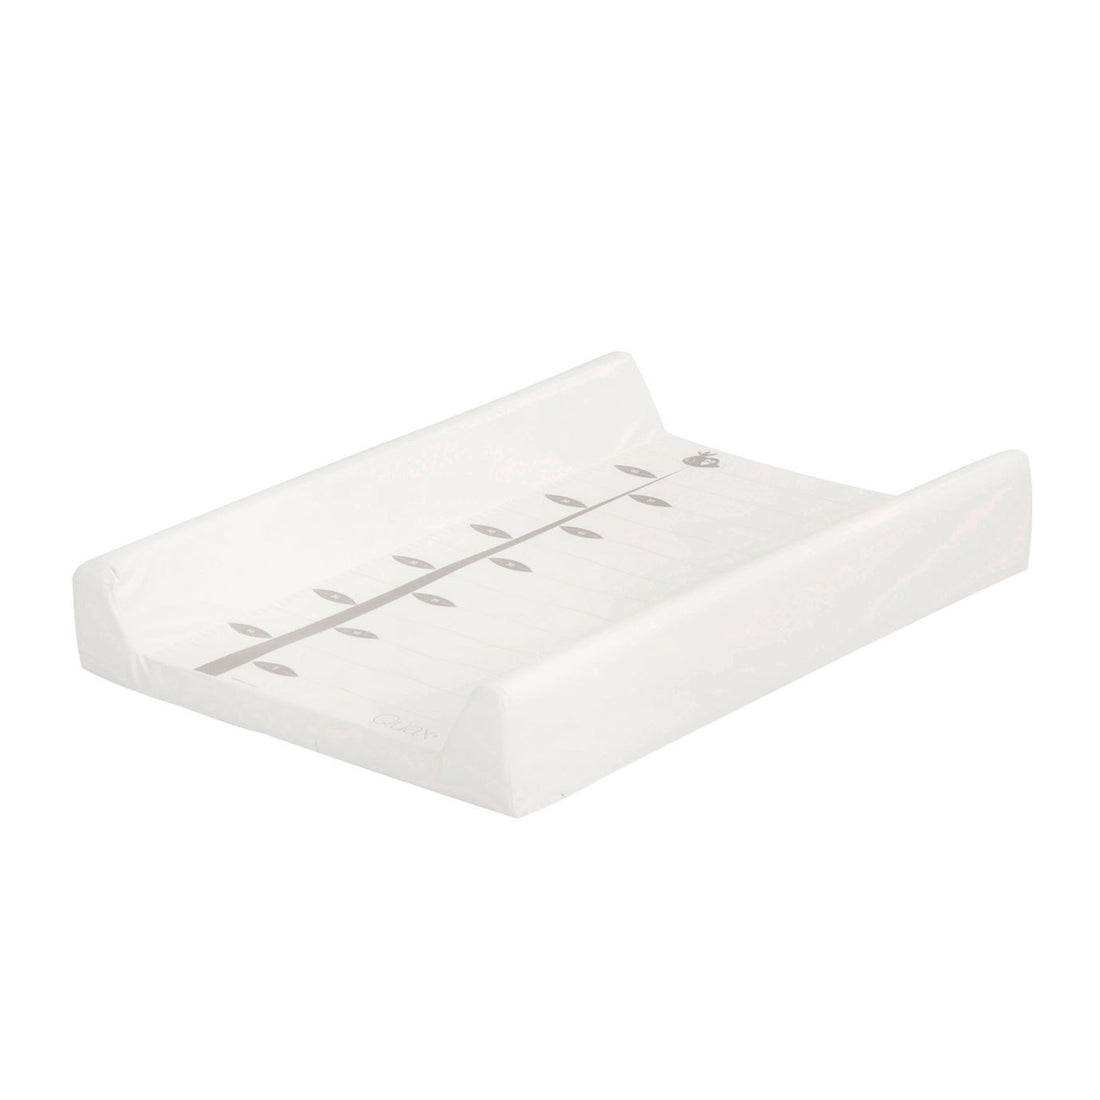 quax-changing-pad-ruler-white- (3)